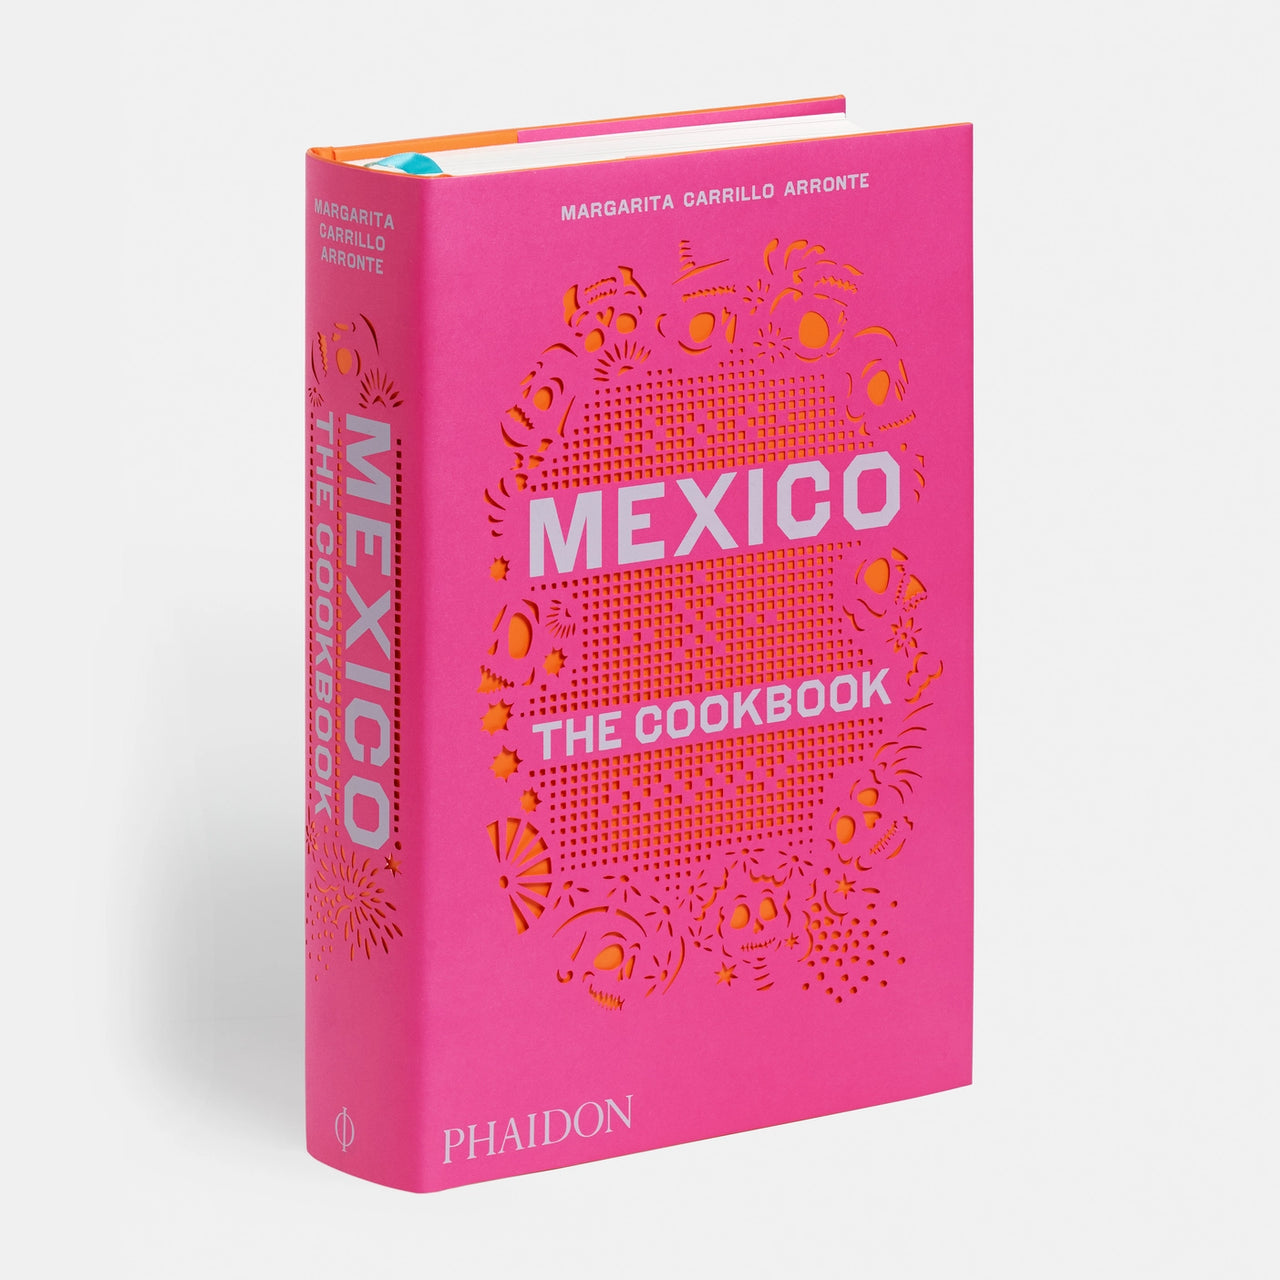 MEXICO - THE COOKBOOK